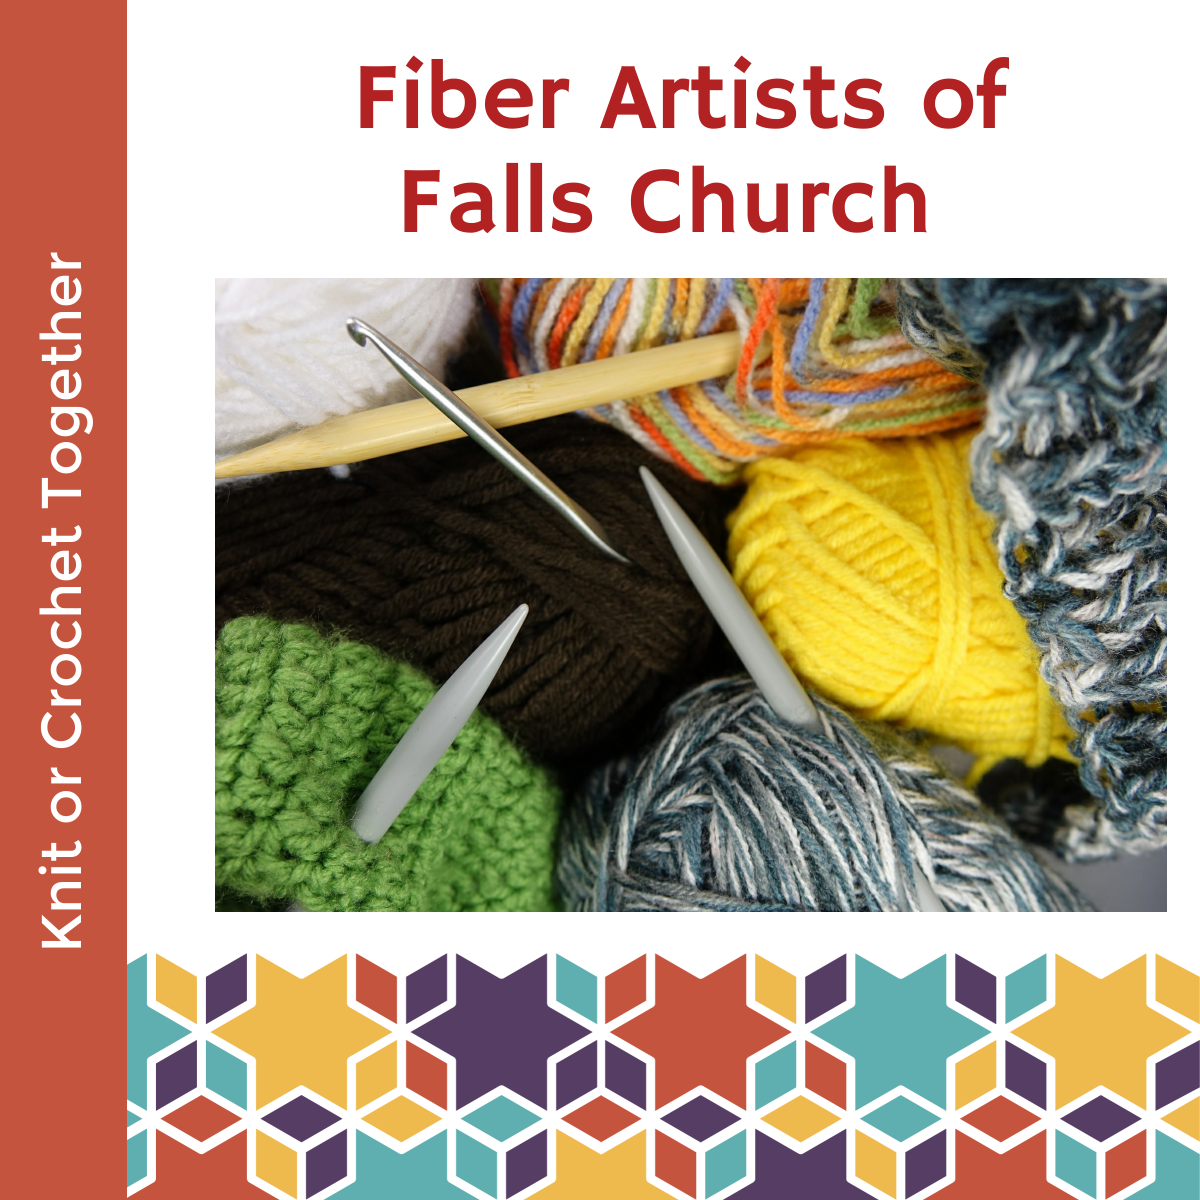 "Fiber Artists of Falls Church" with photo of yarn and kinitting needles